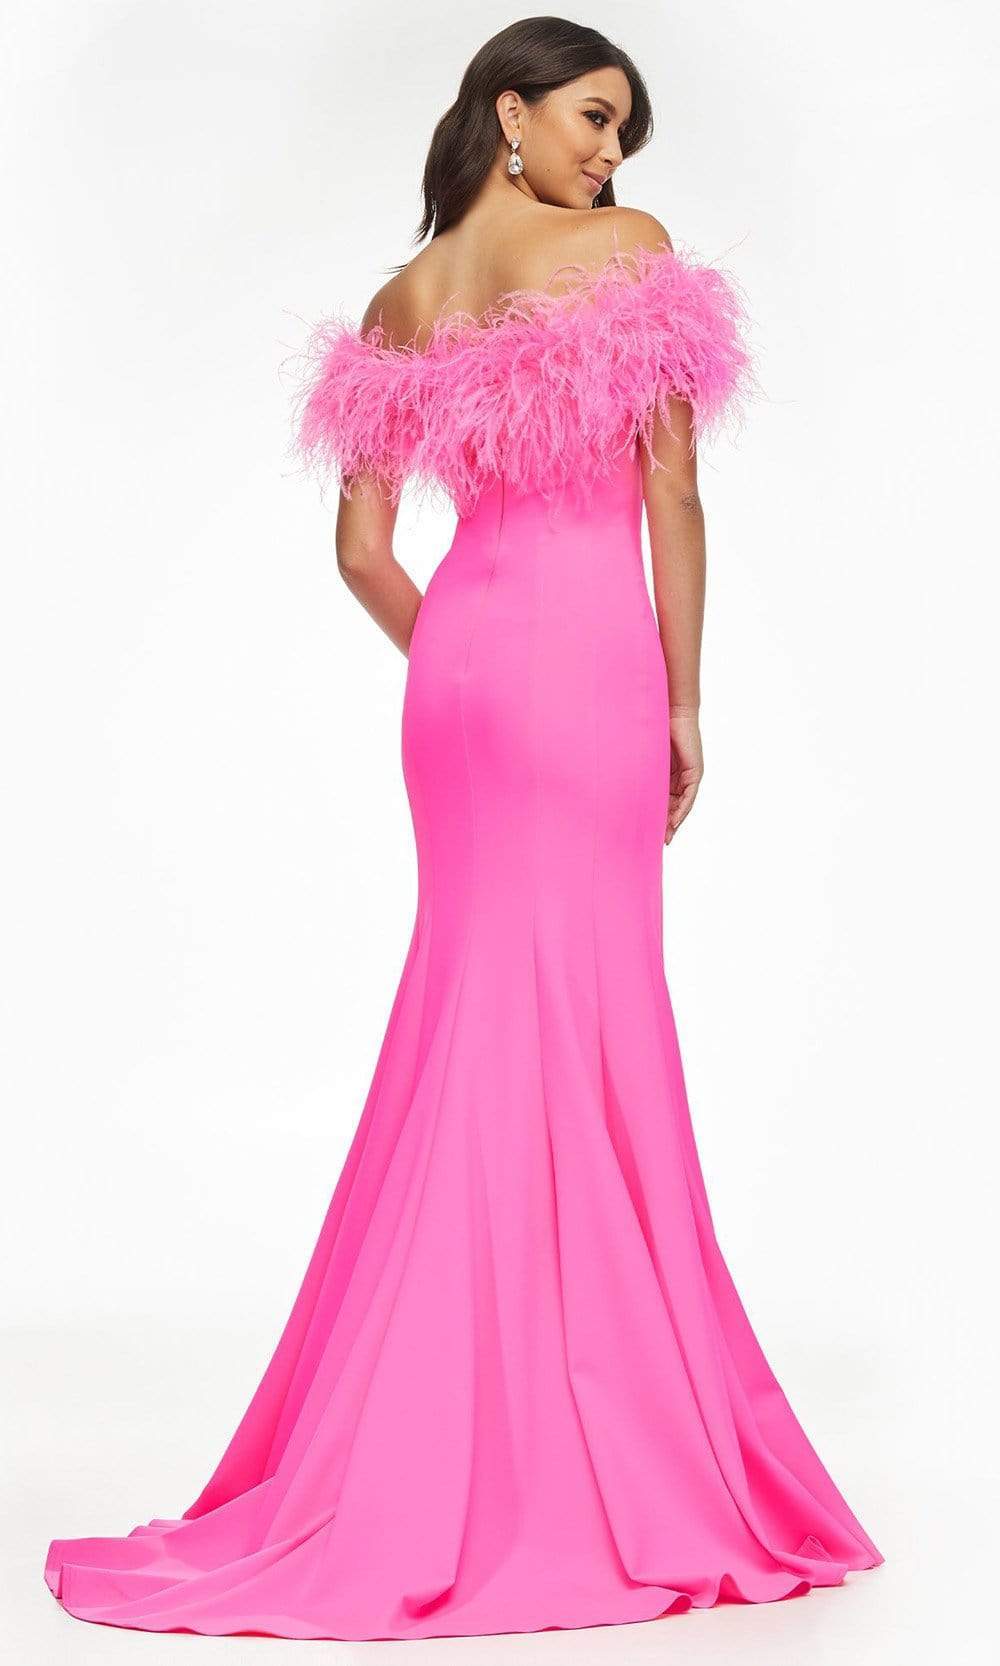 Ashley Lauren - Boa-Detailed High Slit Gown 11099SC In Pink